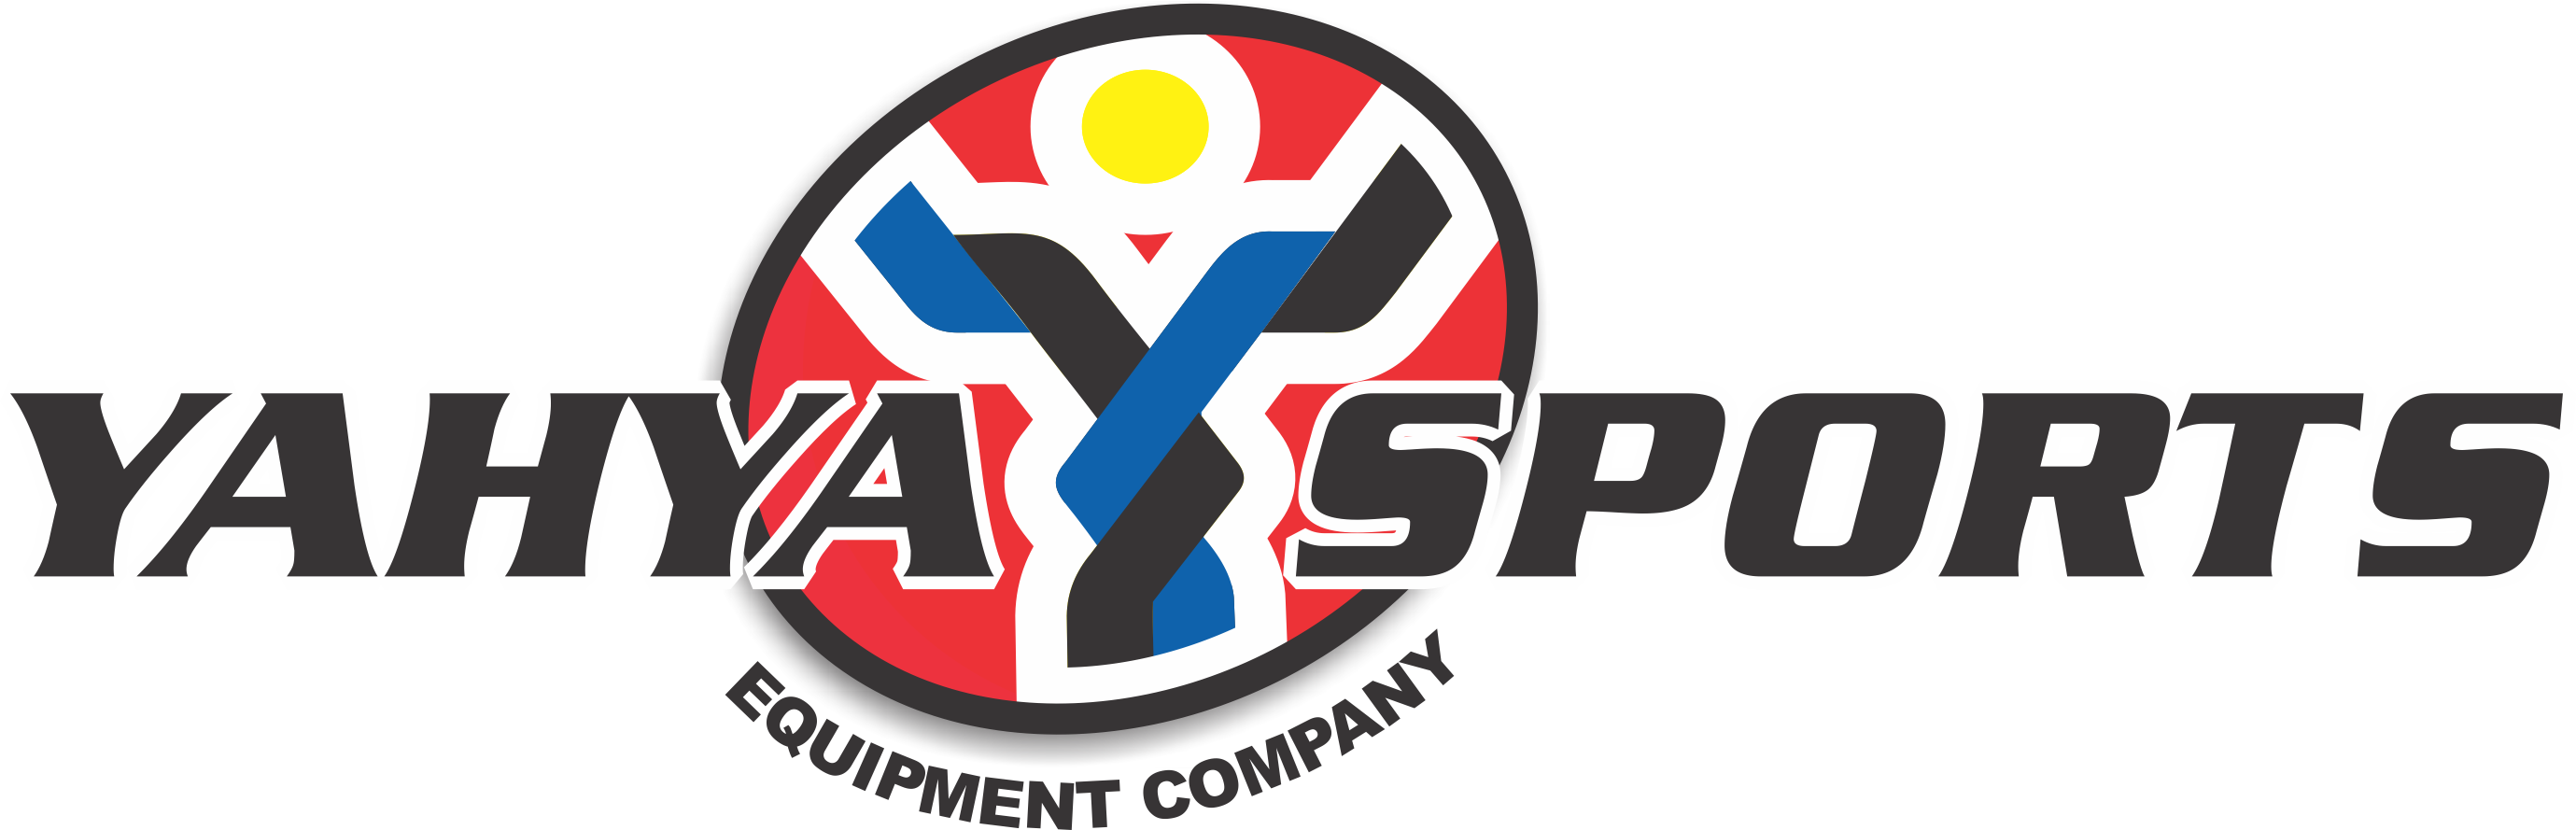 Yahya Sports - Equipment Company